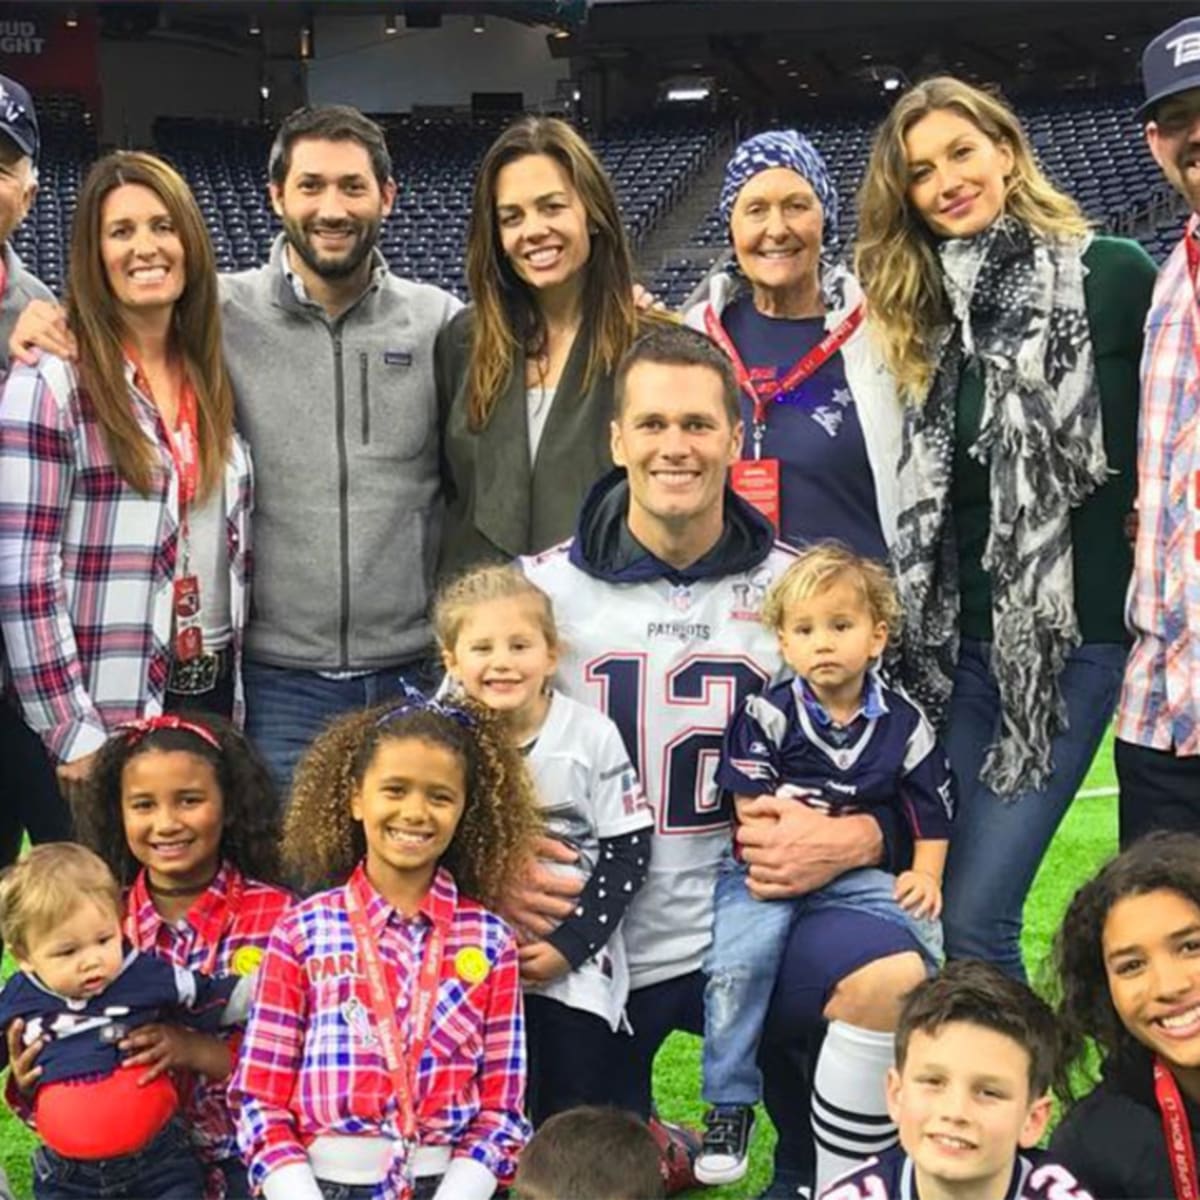 Tom Brady's sister engaged to Kevin Youkilis - The Boston Globe